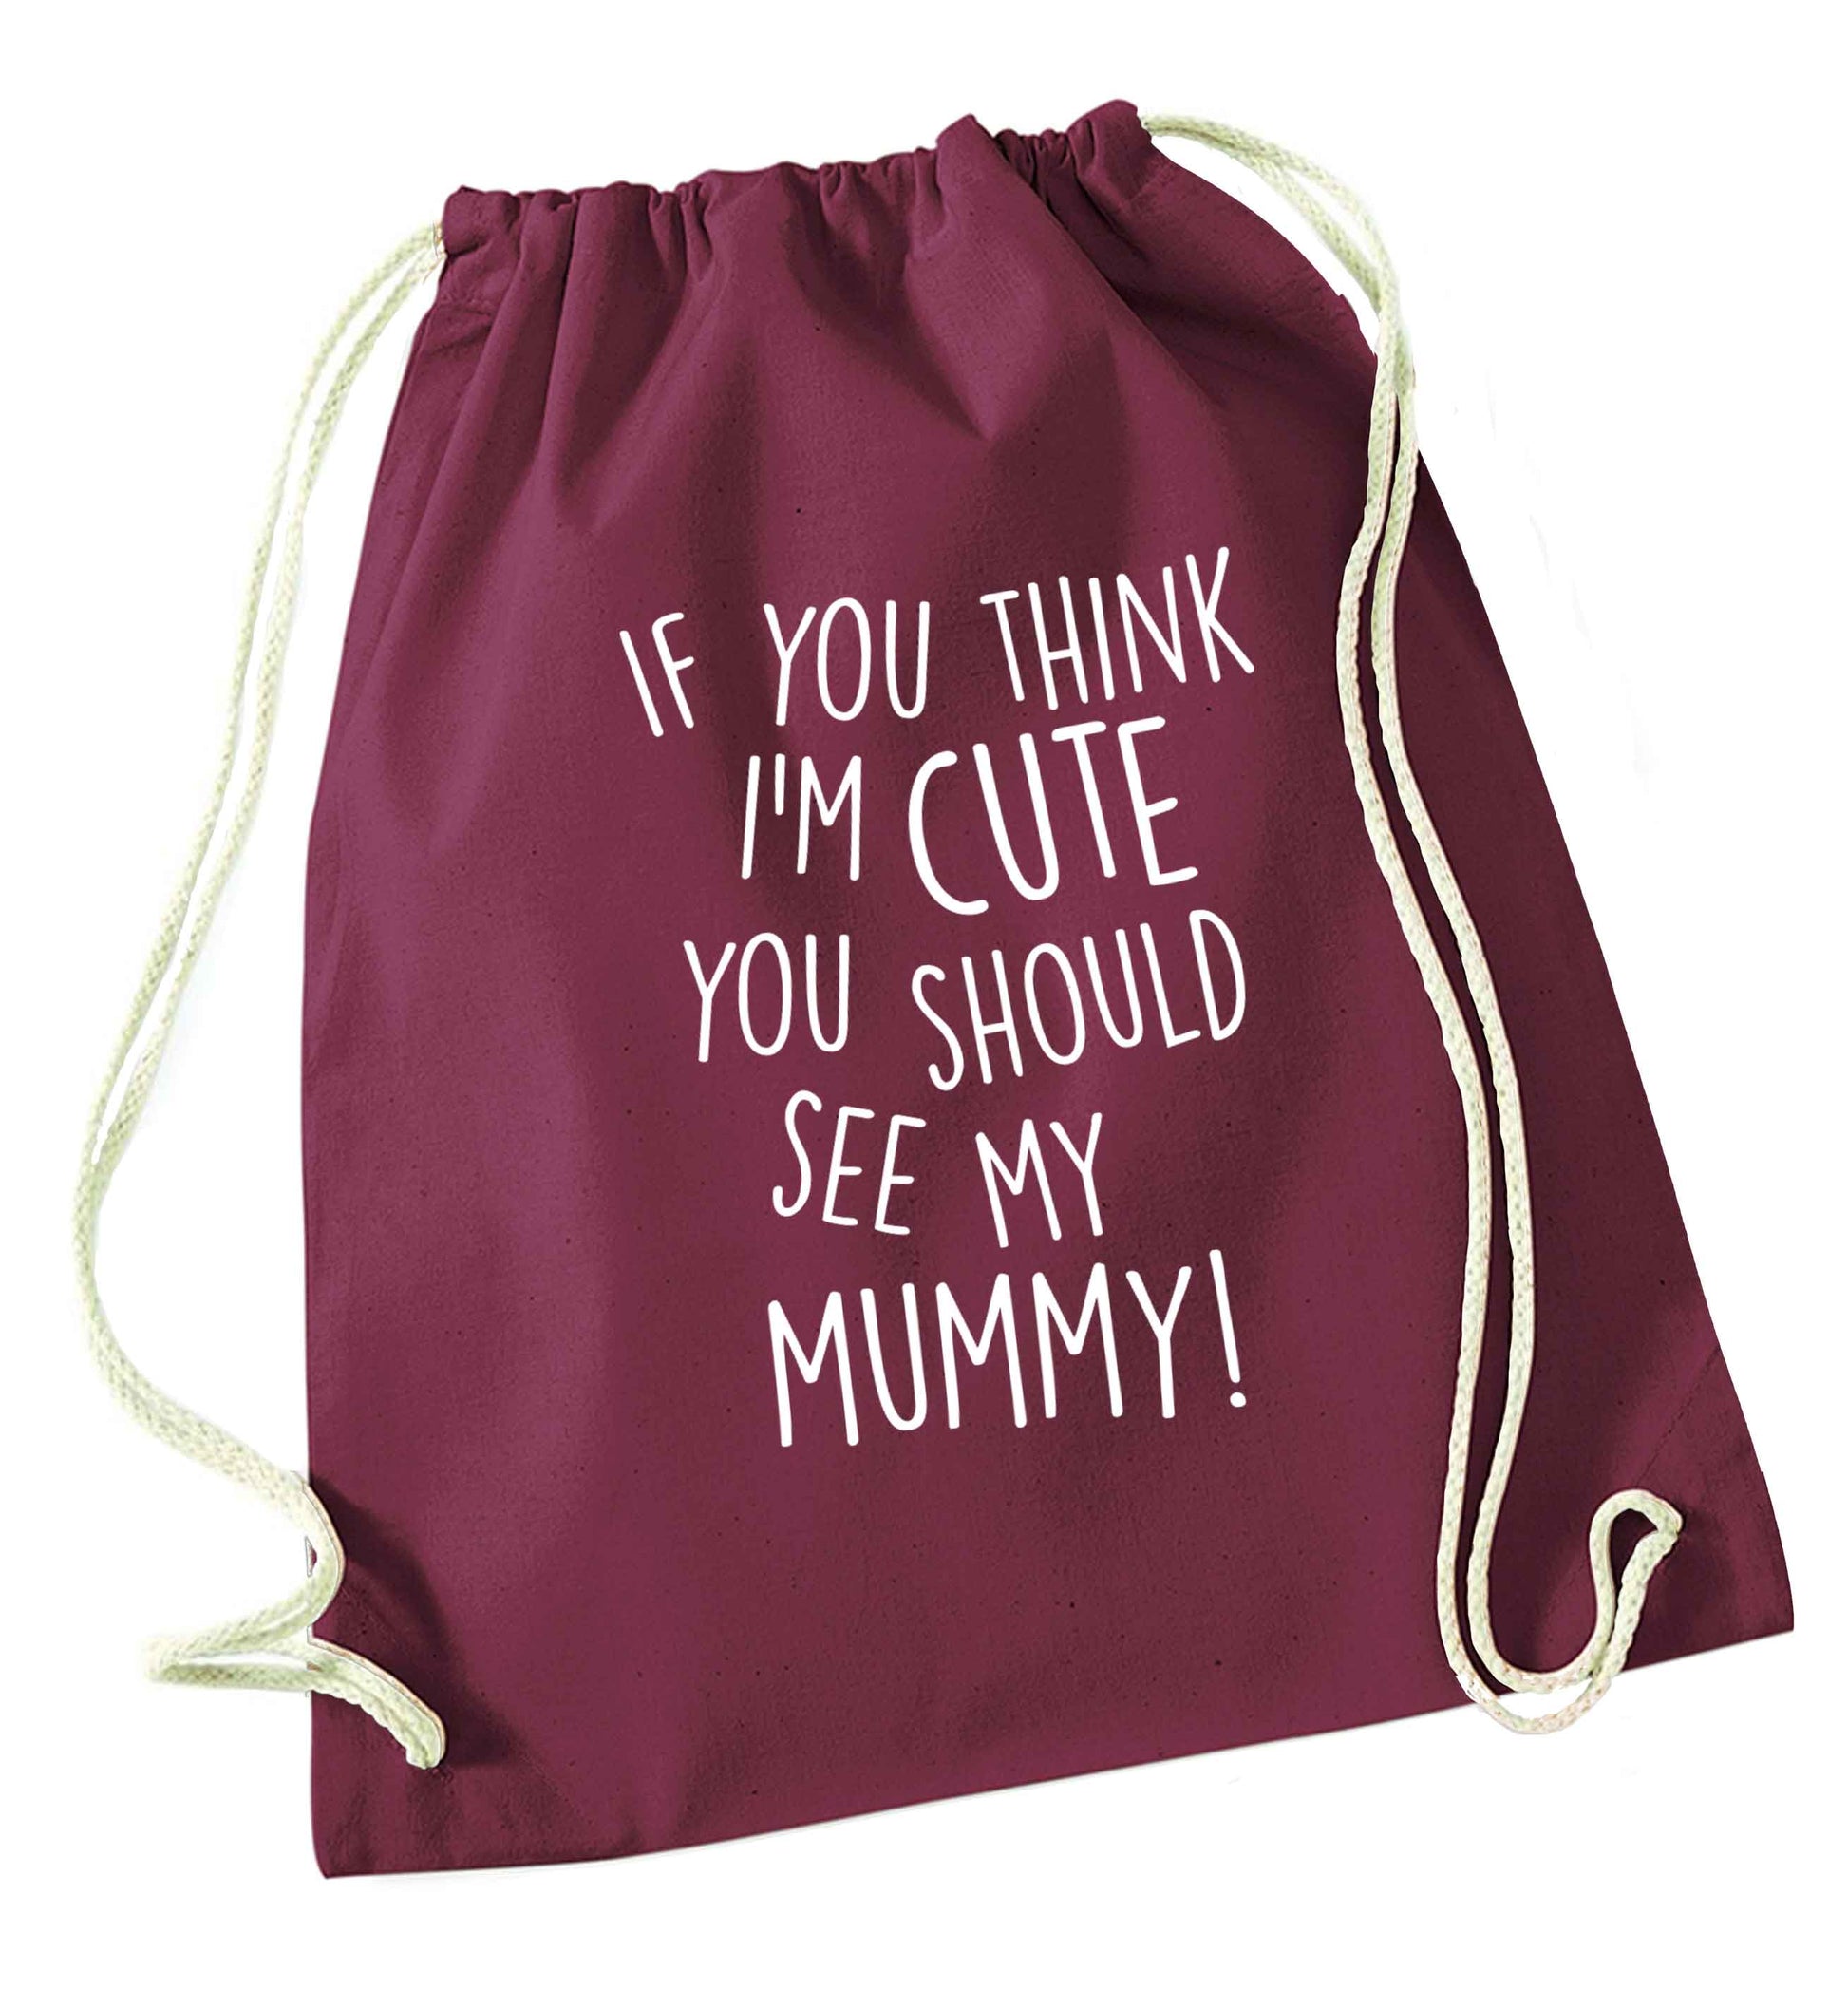 My favourite people call me mummy maroon drawstring bag